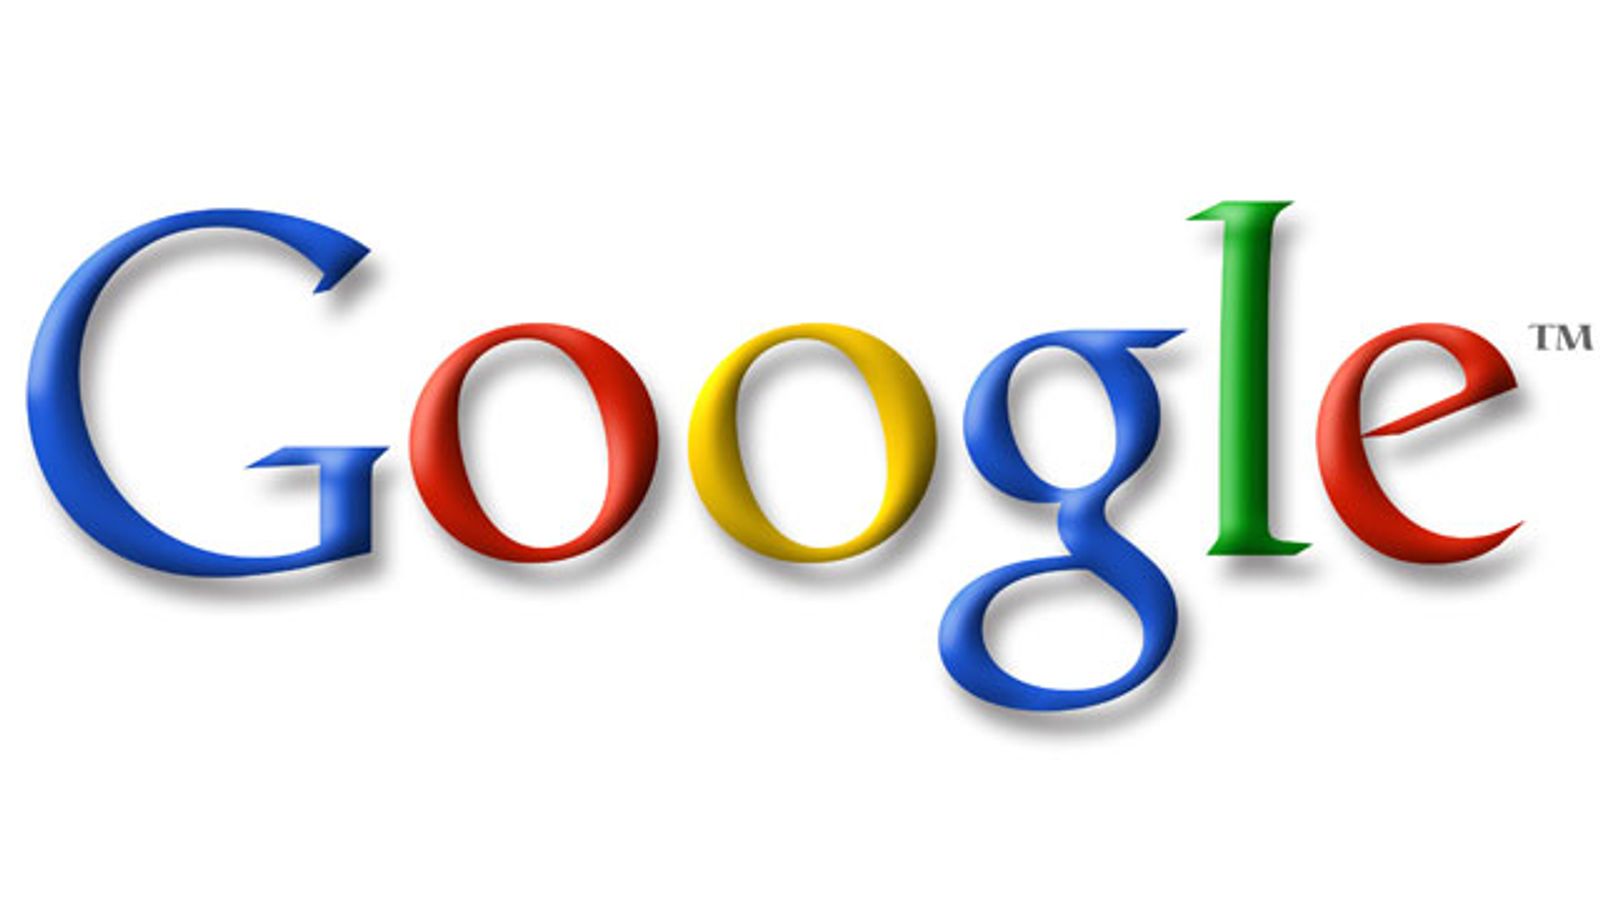 Takedown Piracy Makes Google's Top 5 Watchdogs List